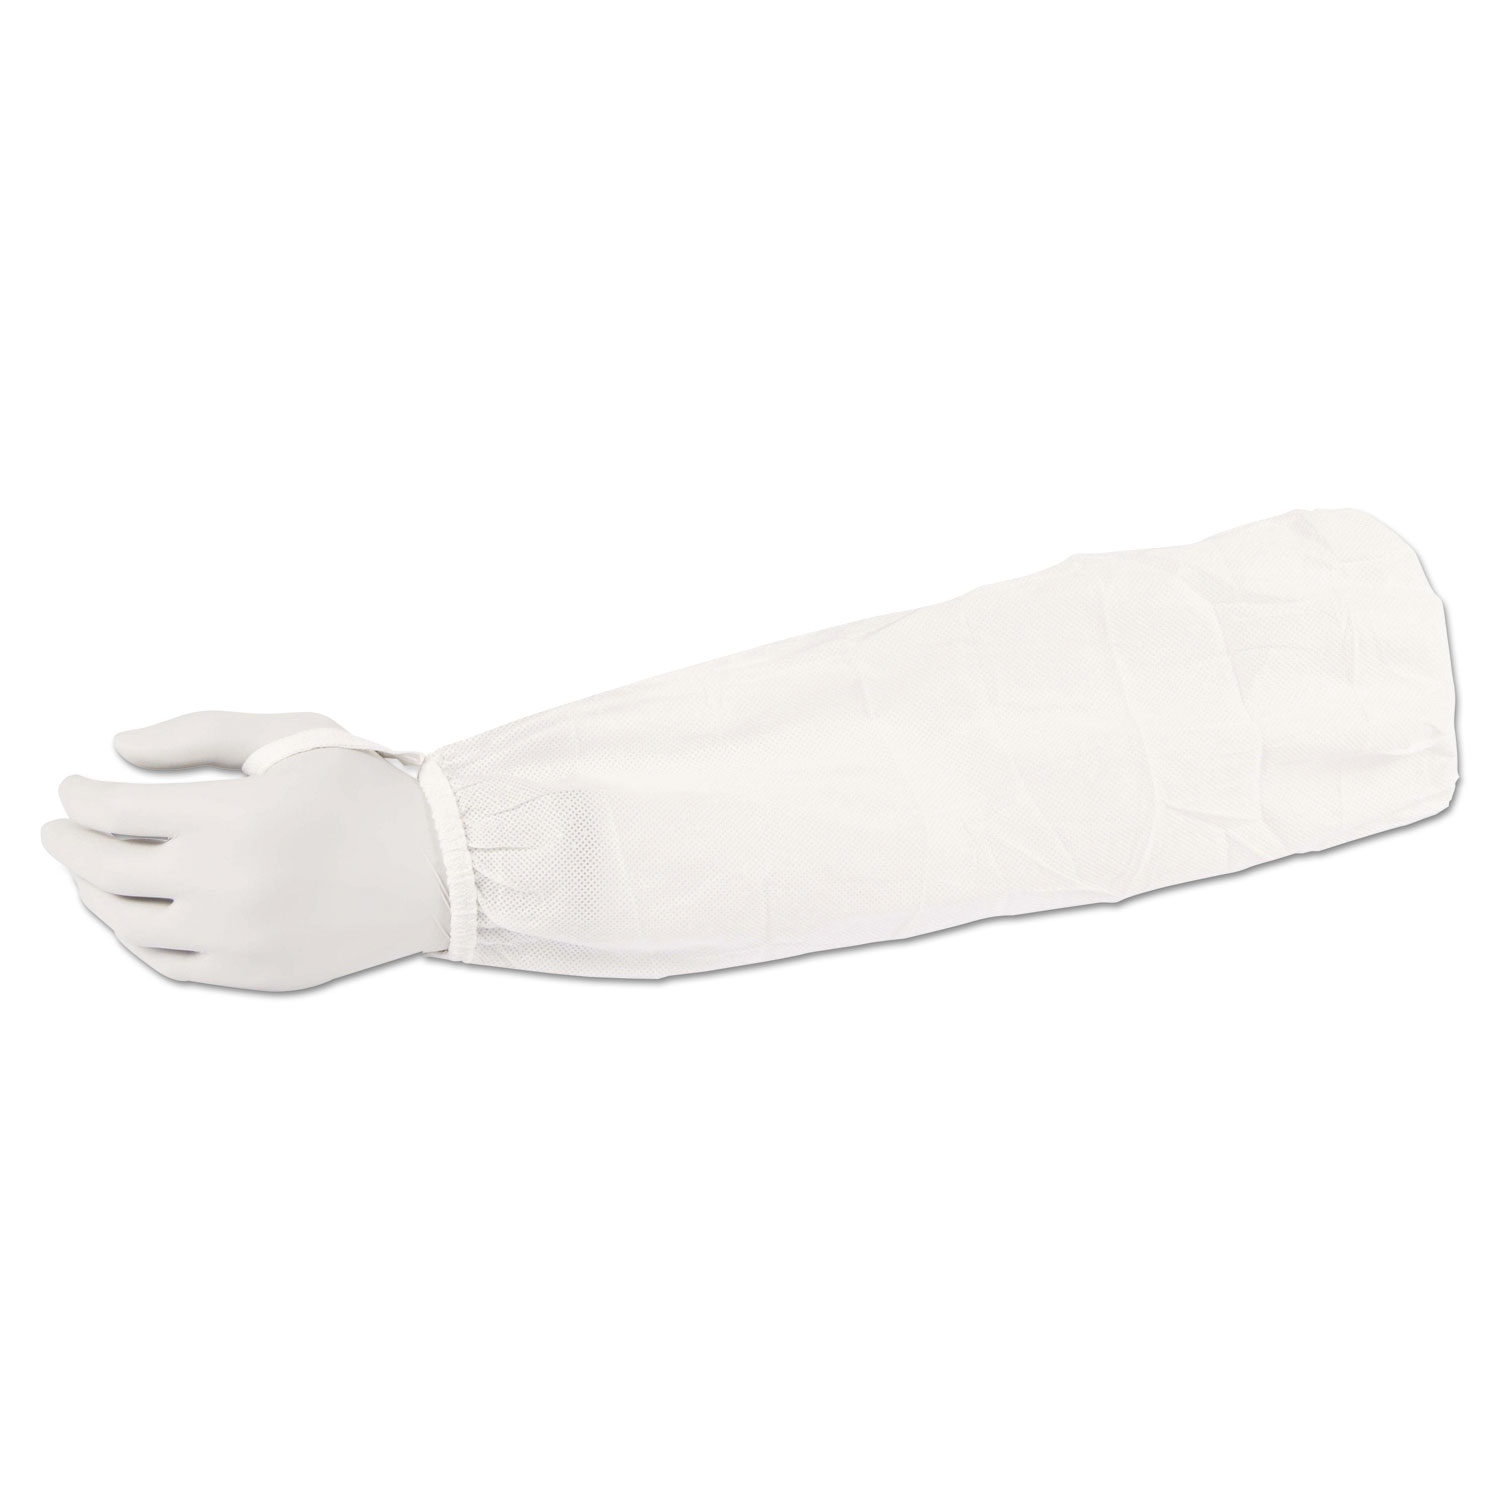 Pure A5 Sterile Sleeve Protector, White, 18, 100/Carton